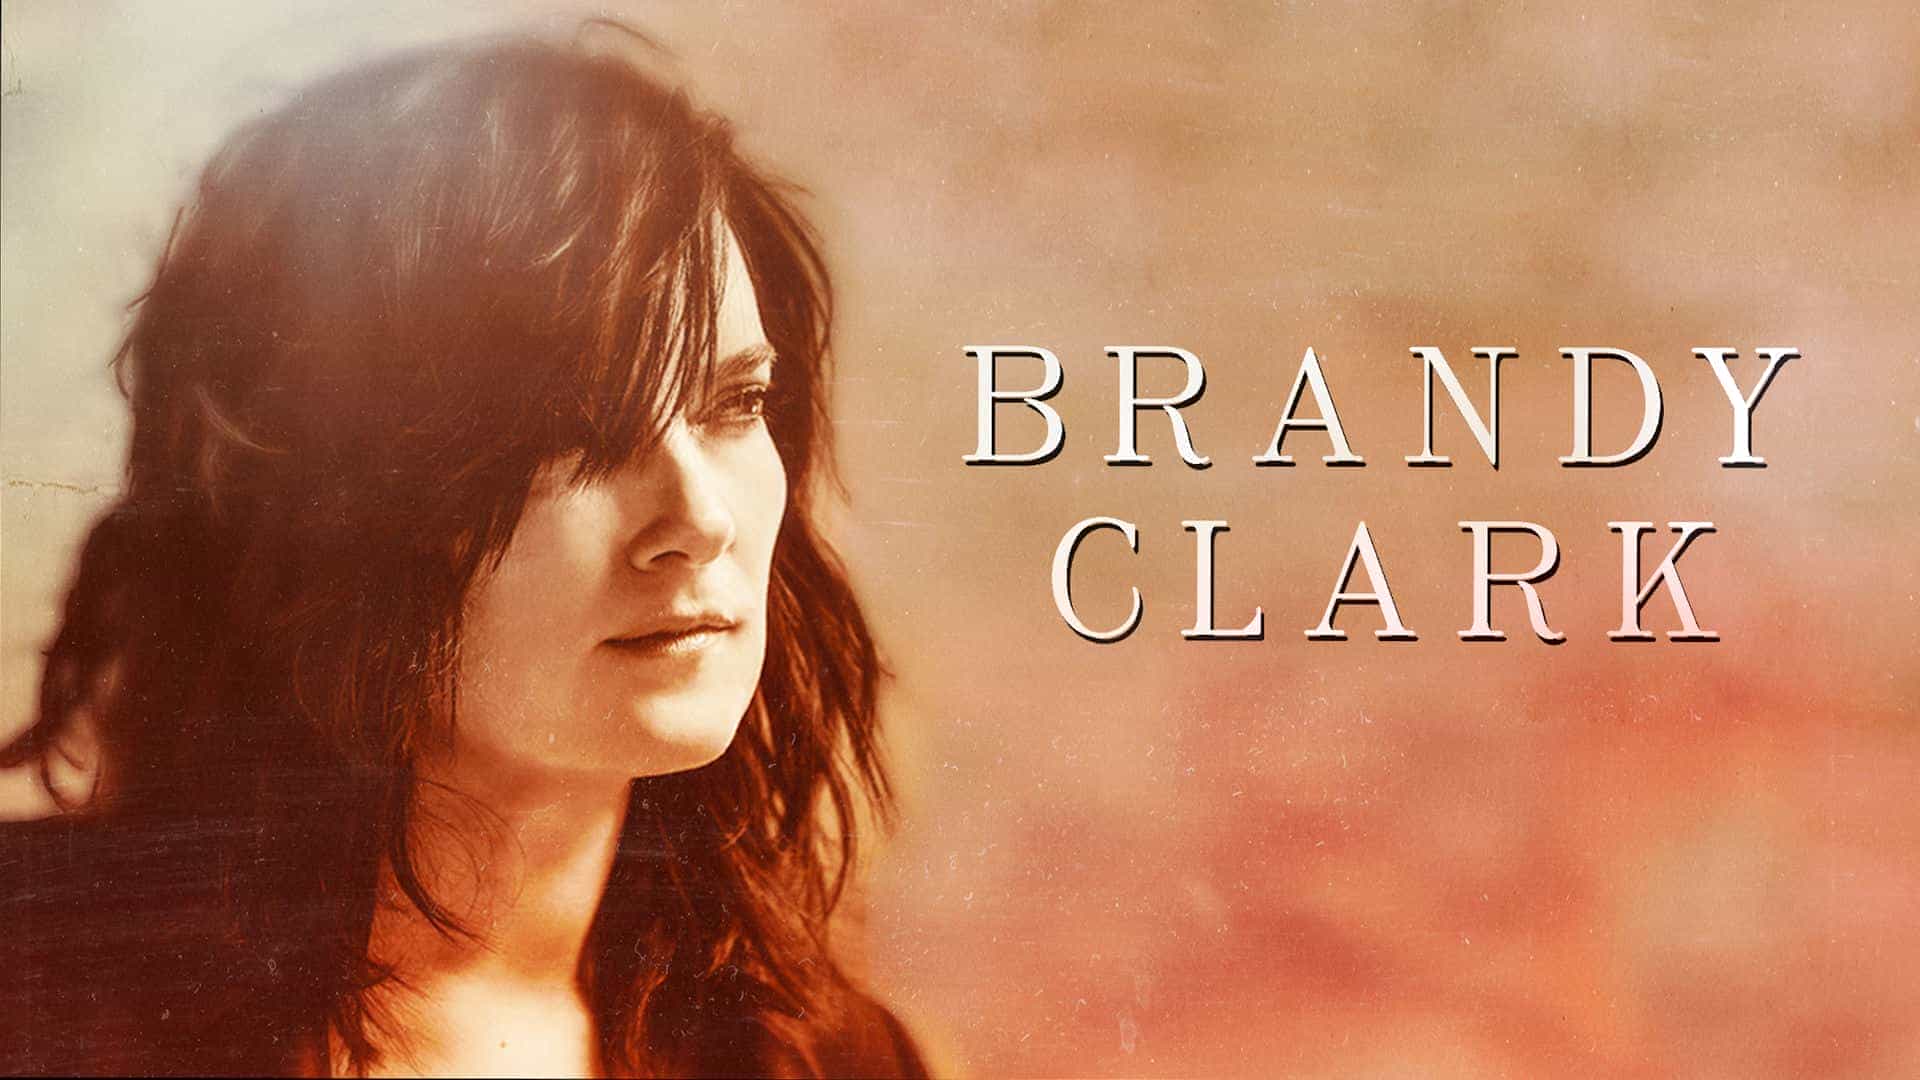 Brandy Clark